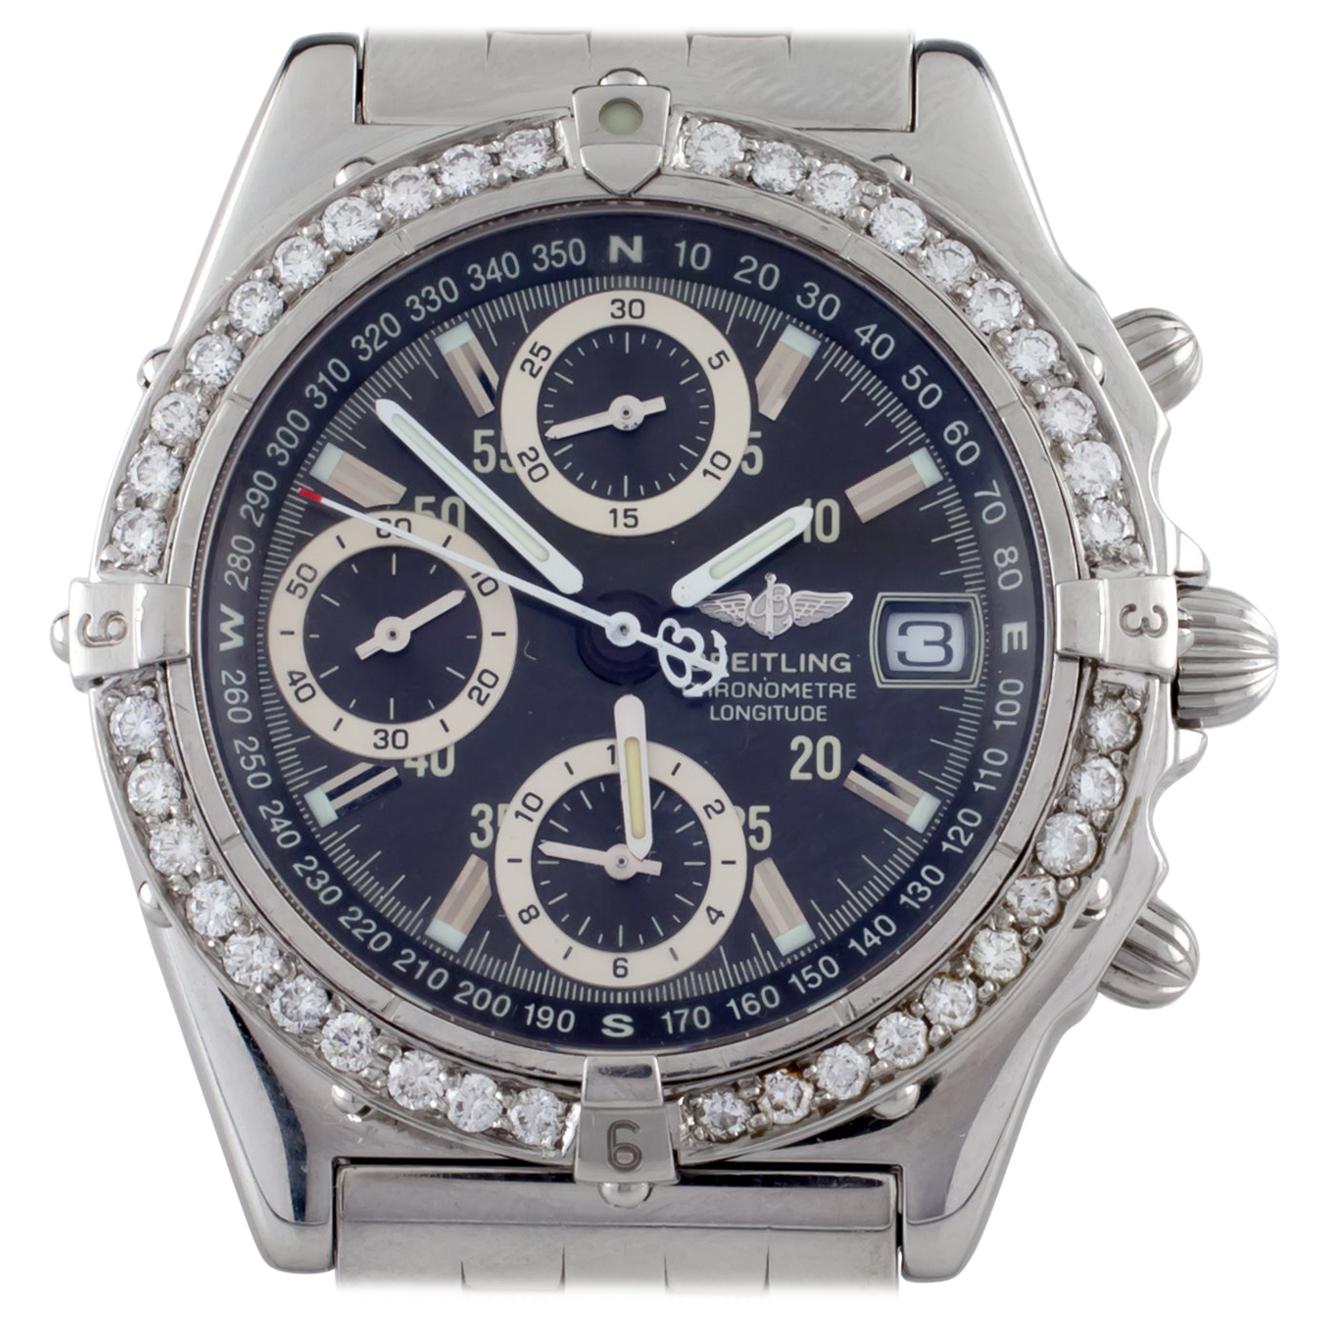 Breitling Chronometre Longitude SS Automatik Herrenuhr A20348 mit Diamant-Lünette im Angebot